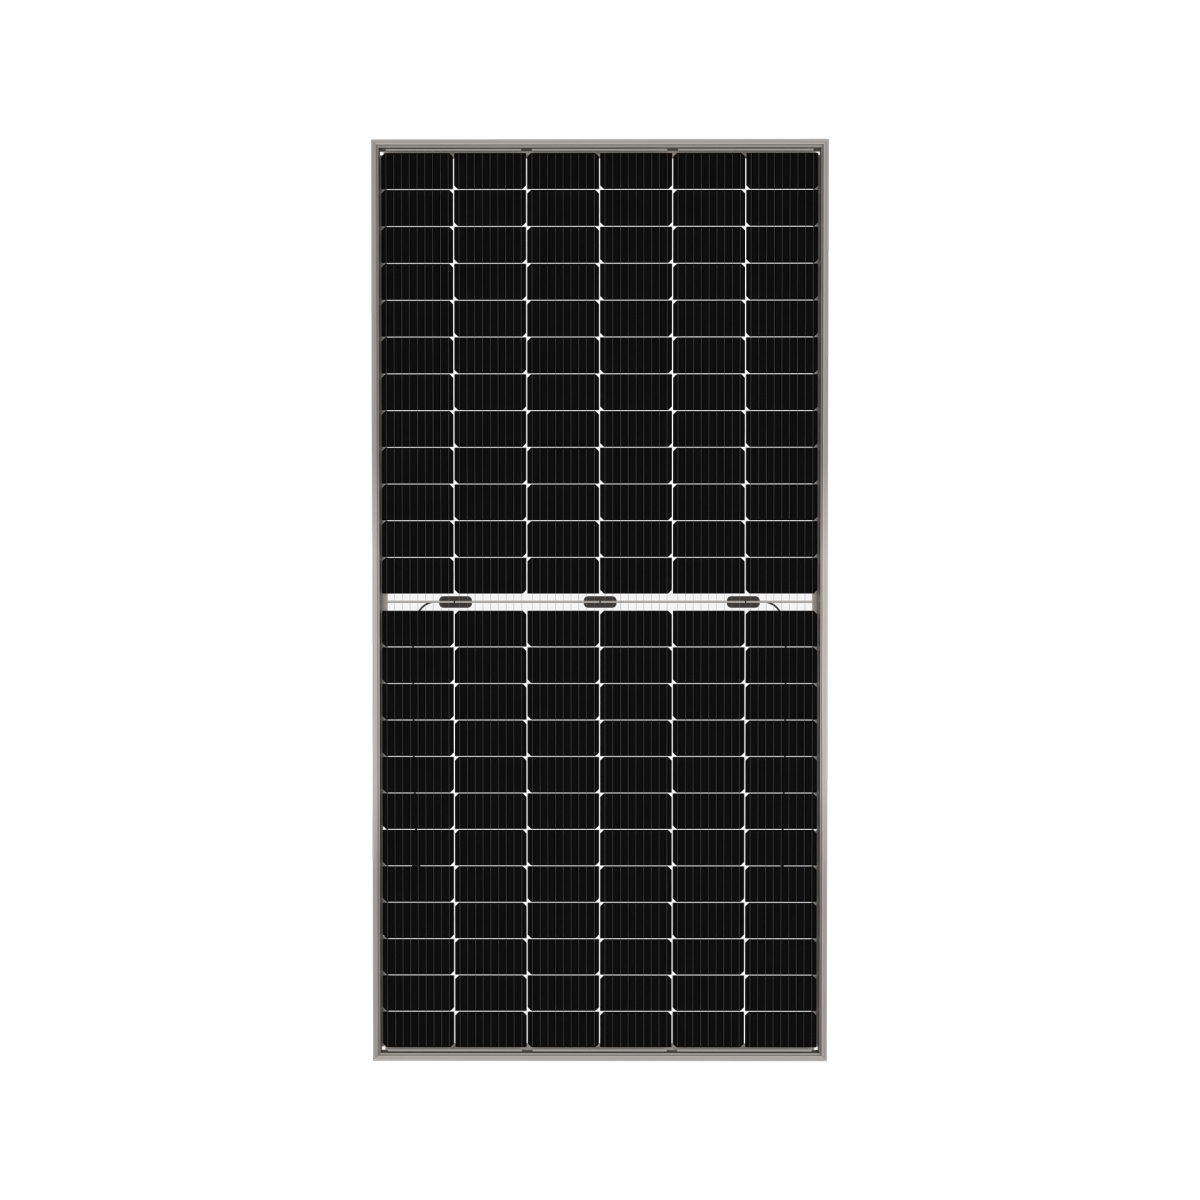 TommaTech 455 Watt 144 Percmono Bifazial Half-Cut Multi Busbar Solarpanel